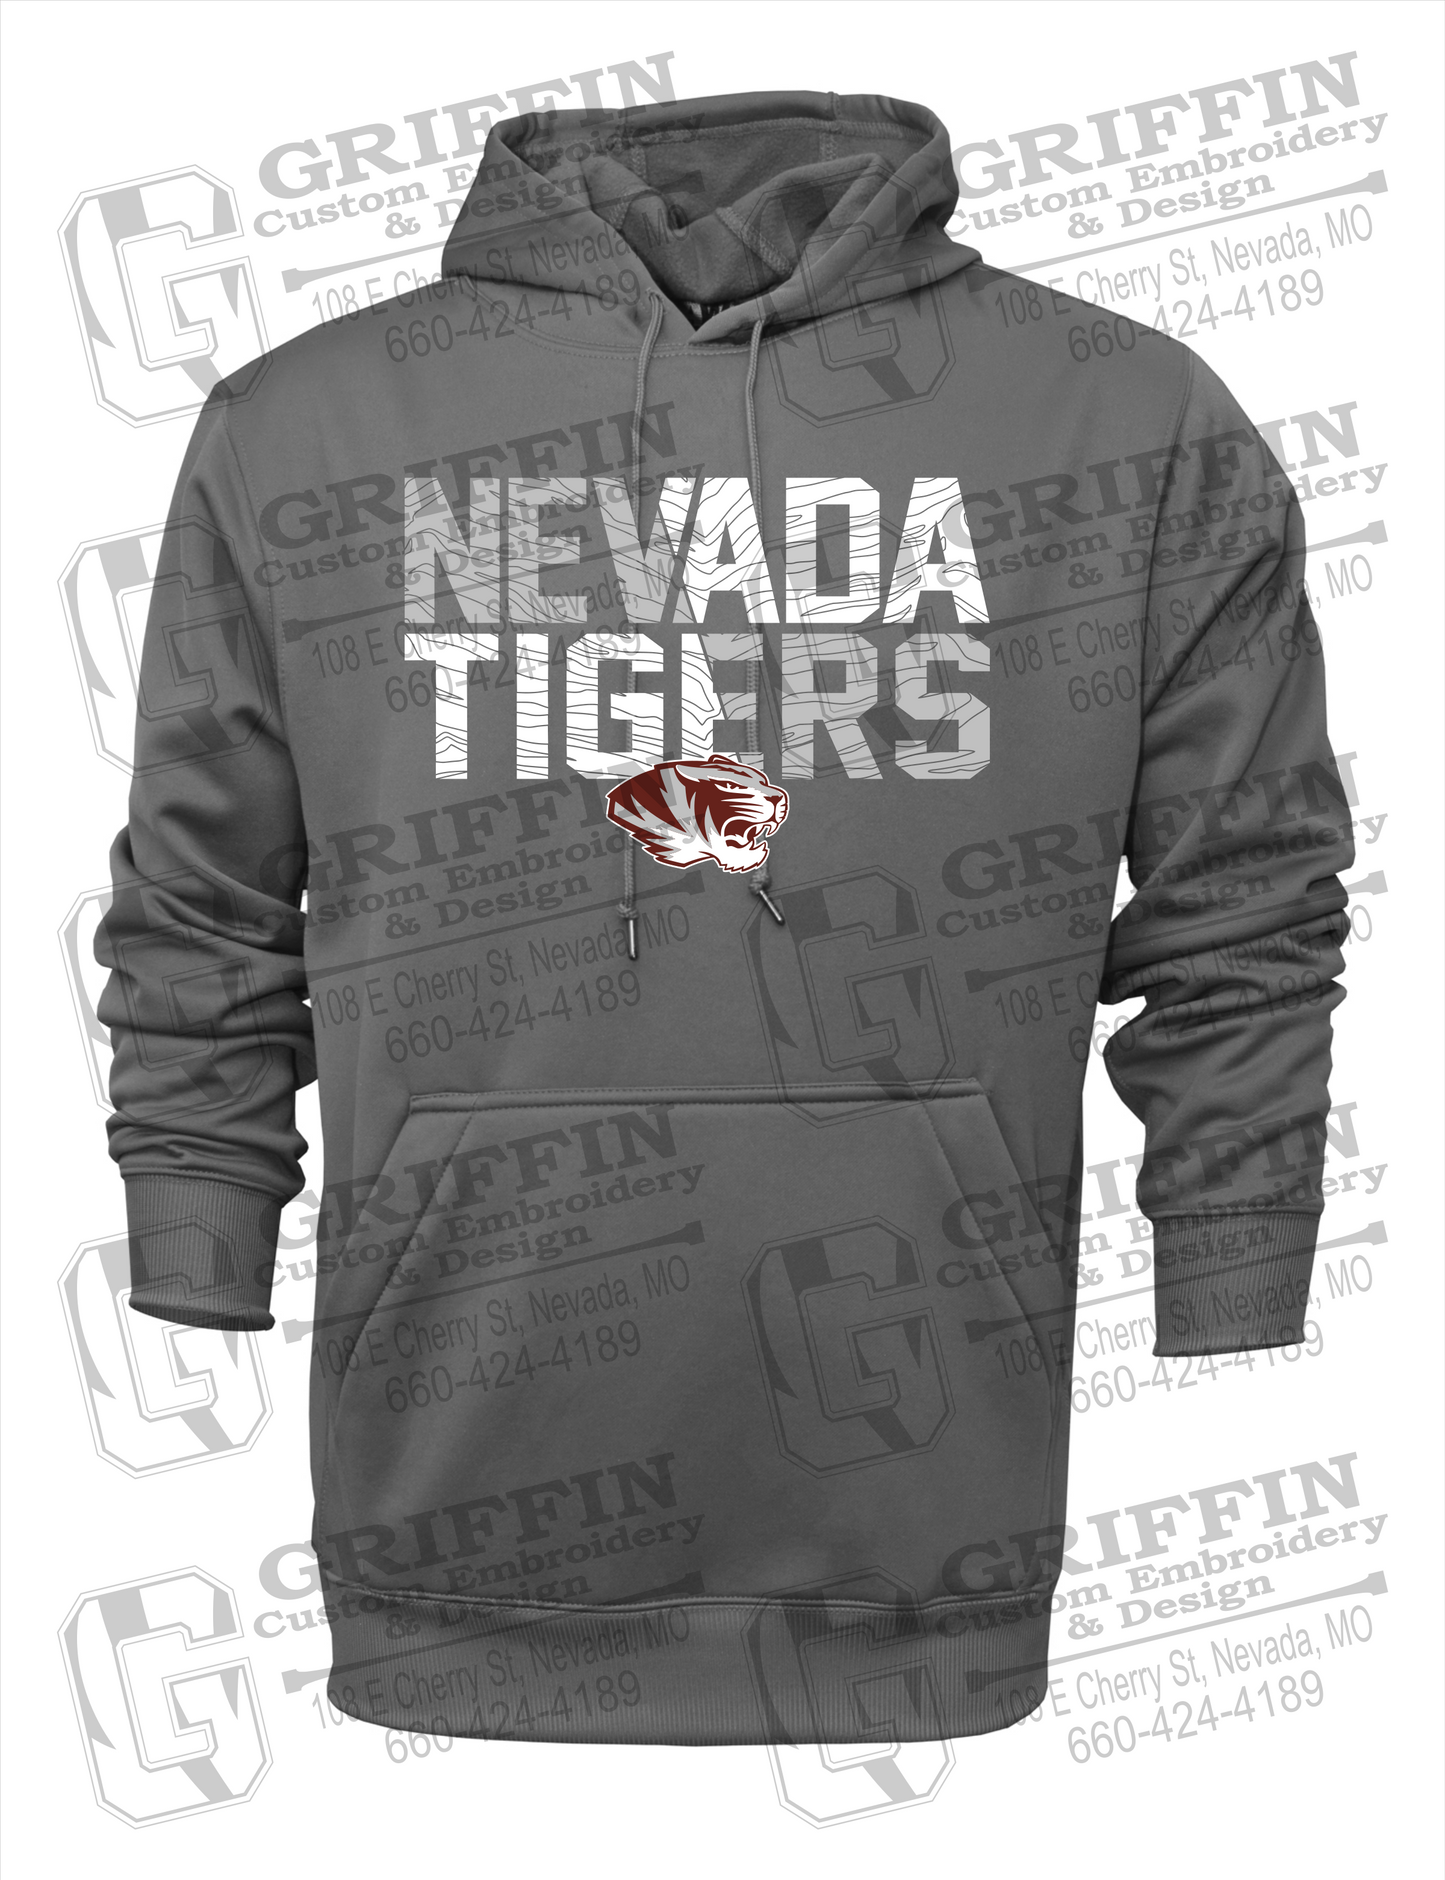 Nevada Tigers 23-L Hoodie